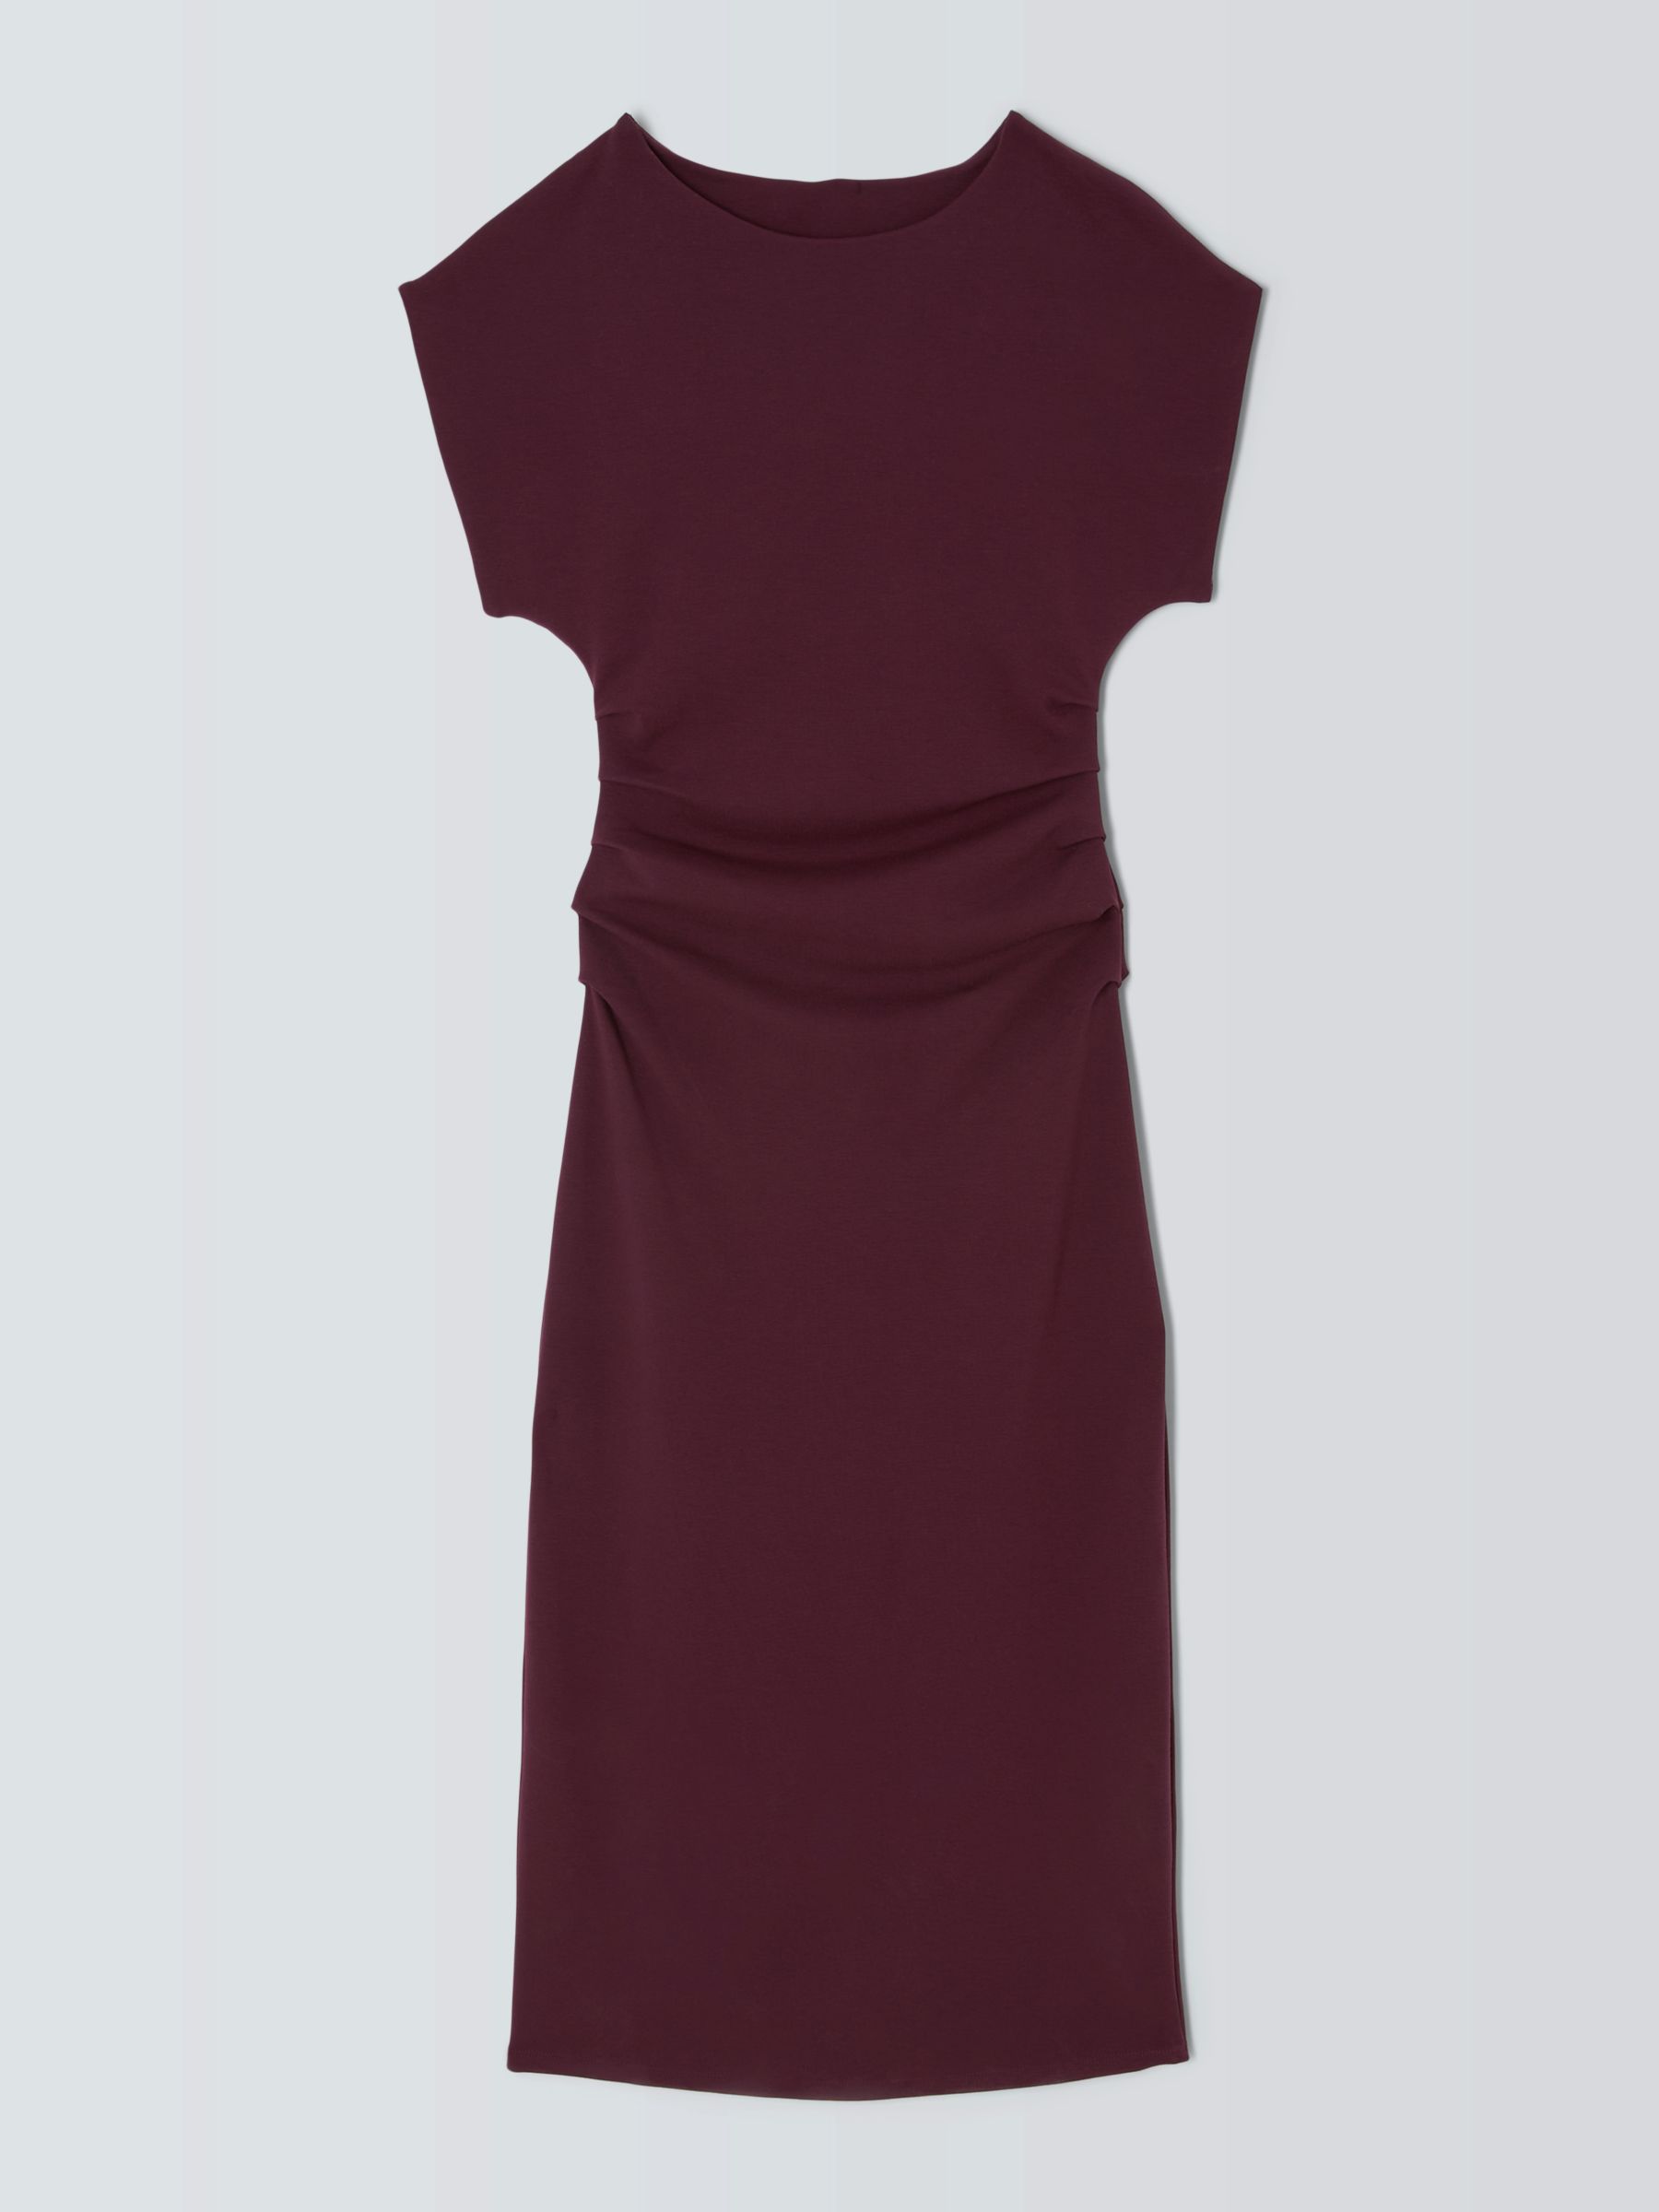 Buy John Lewis Cap Sleeve Dress Online at johnlewis.com